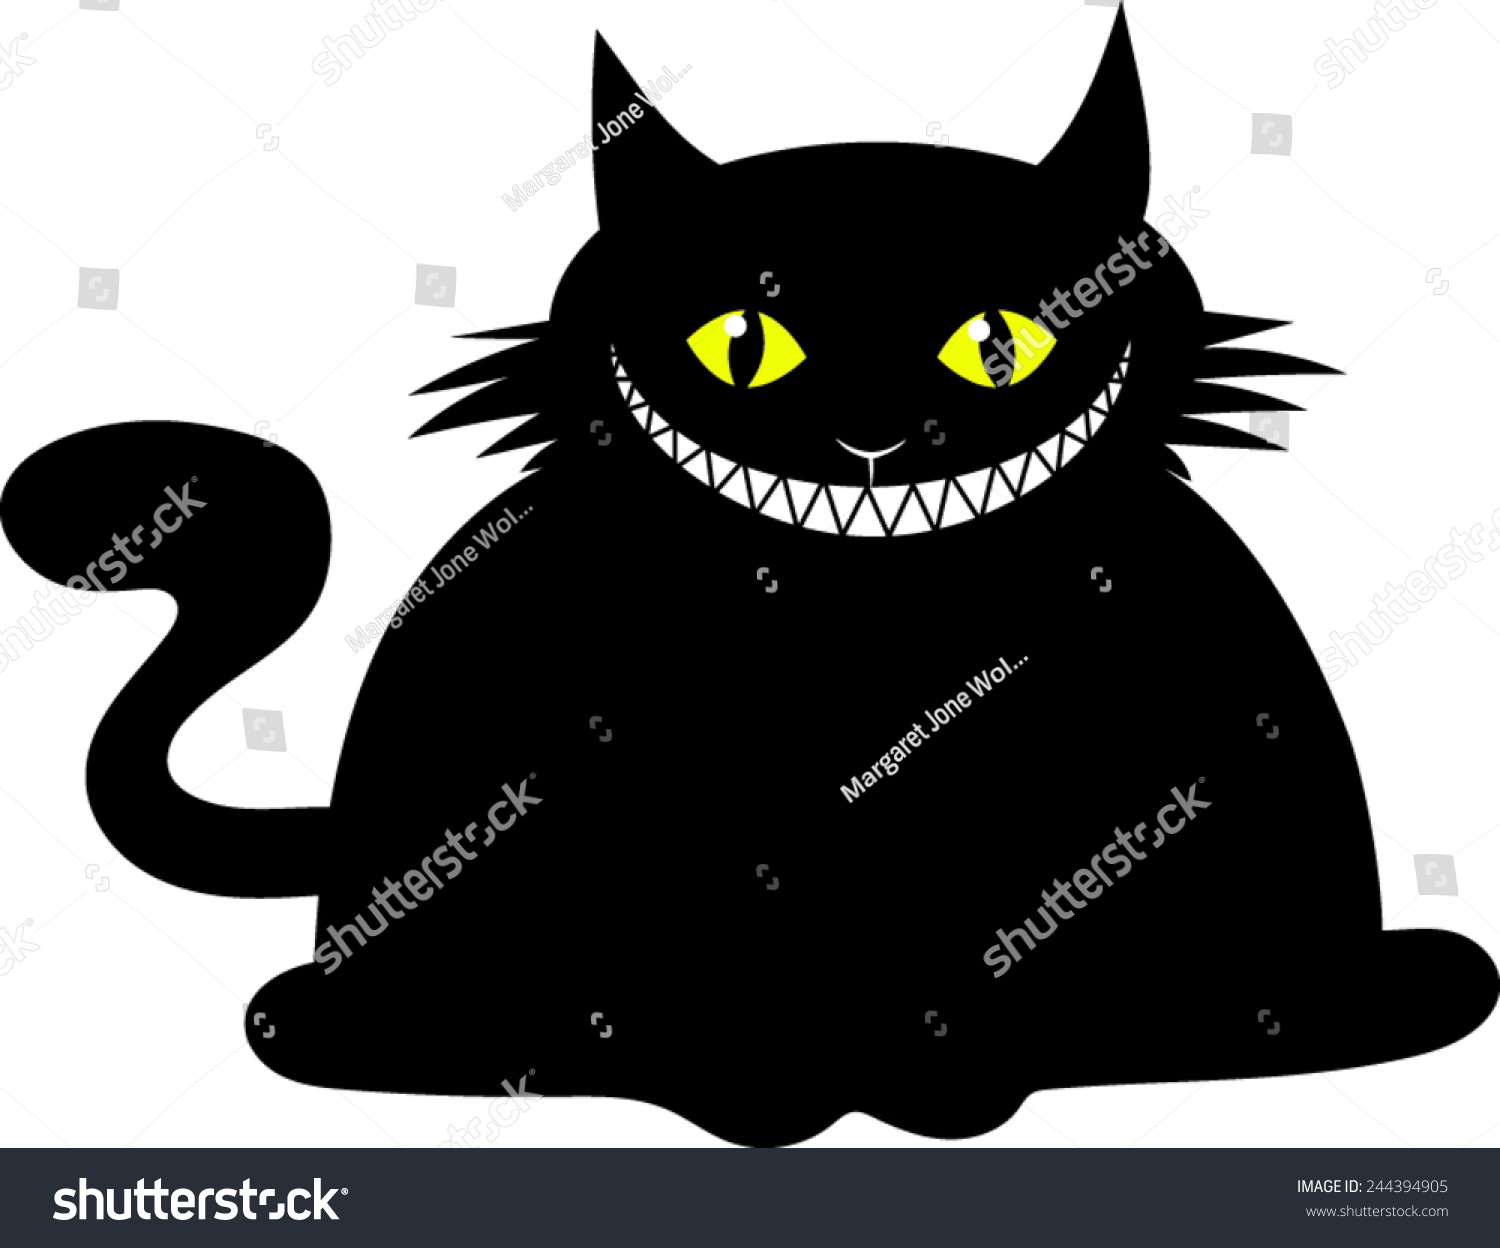 SVG of Fat Black Cat - Cartoon - Vector Image svg